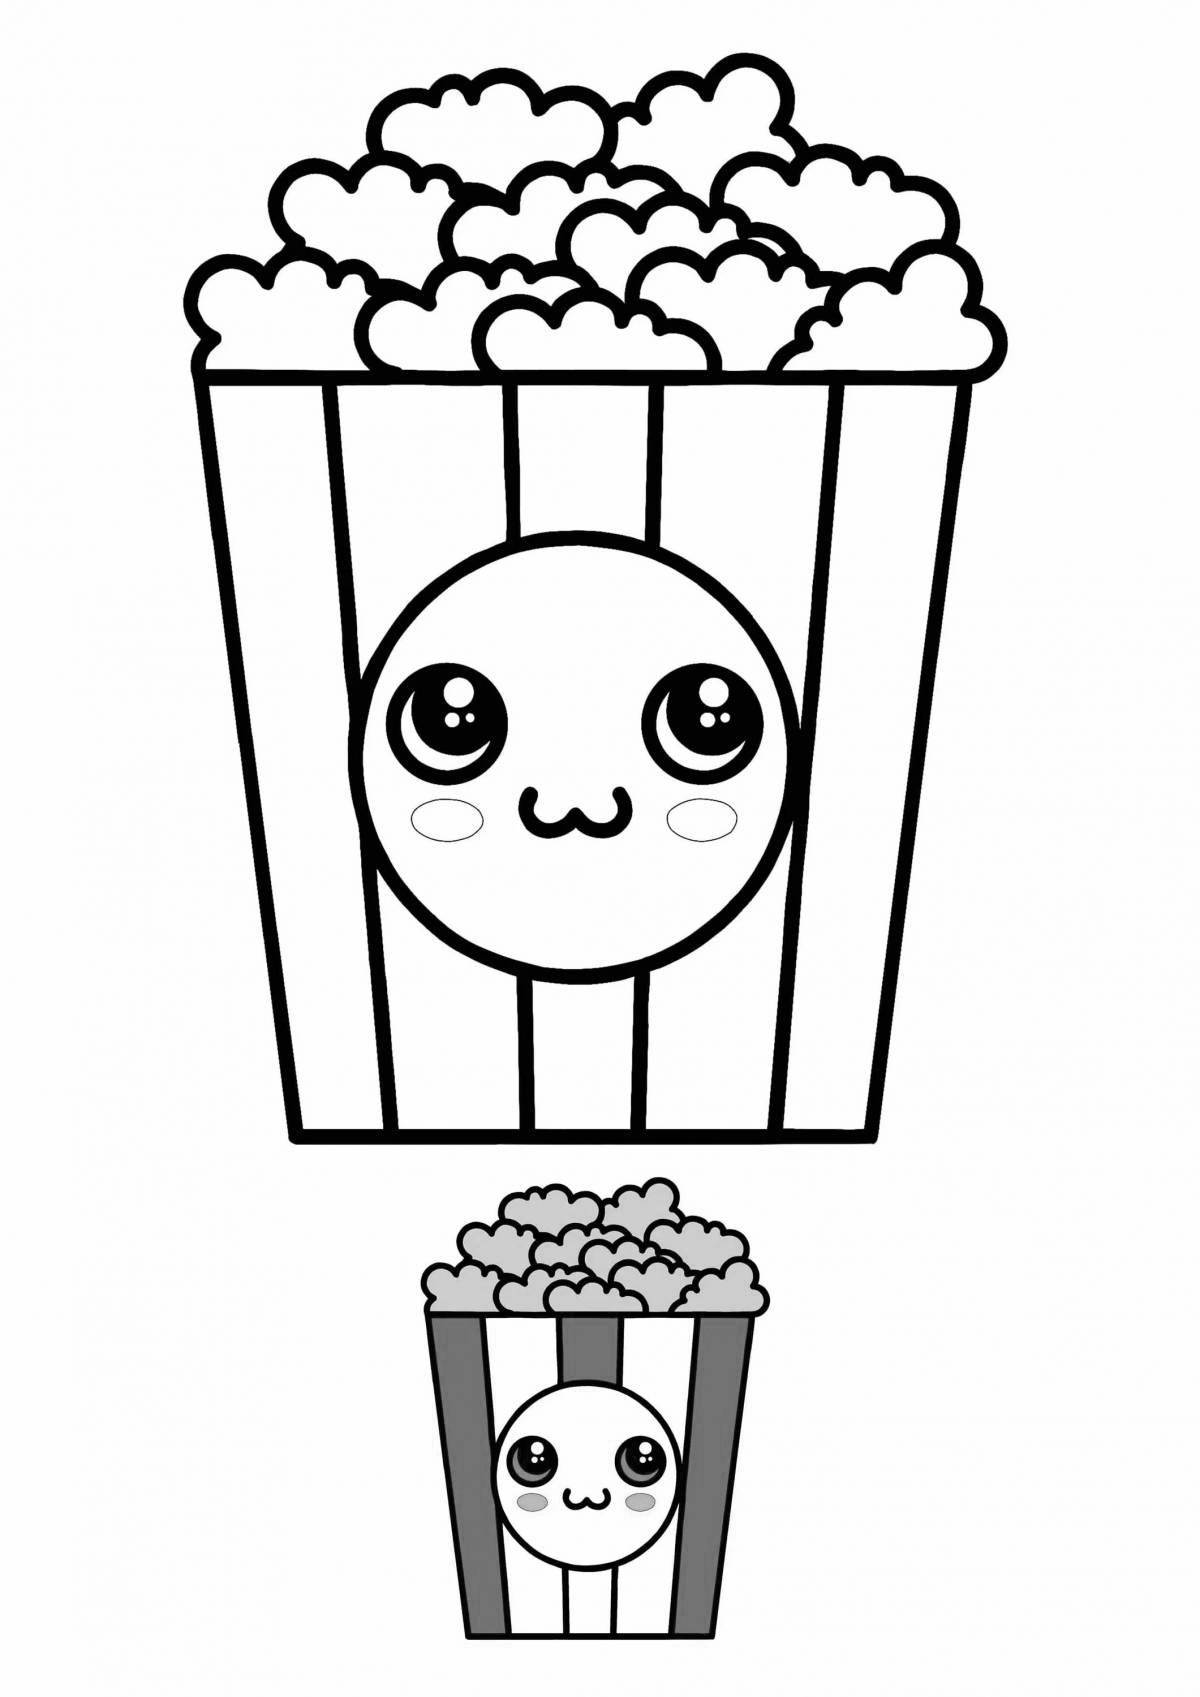 Children's popcorn #4